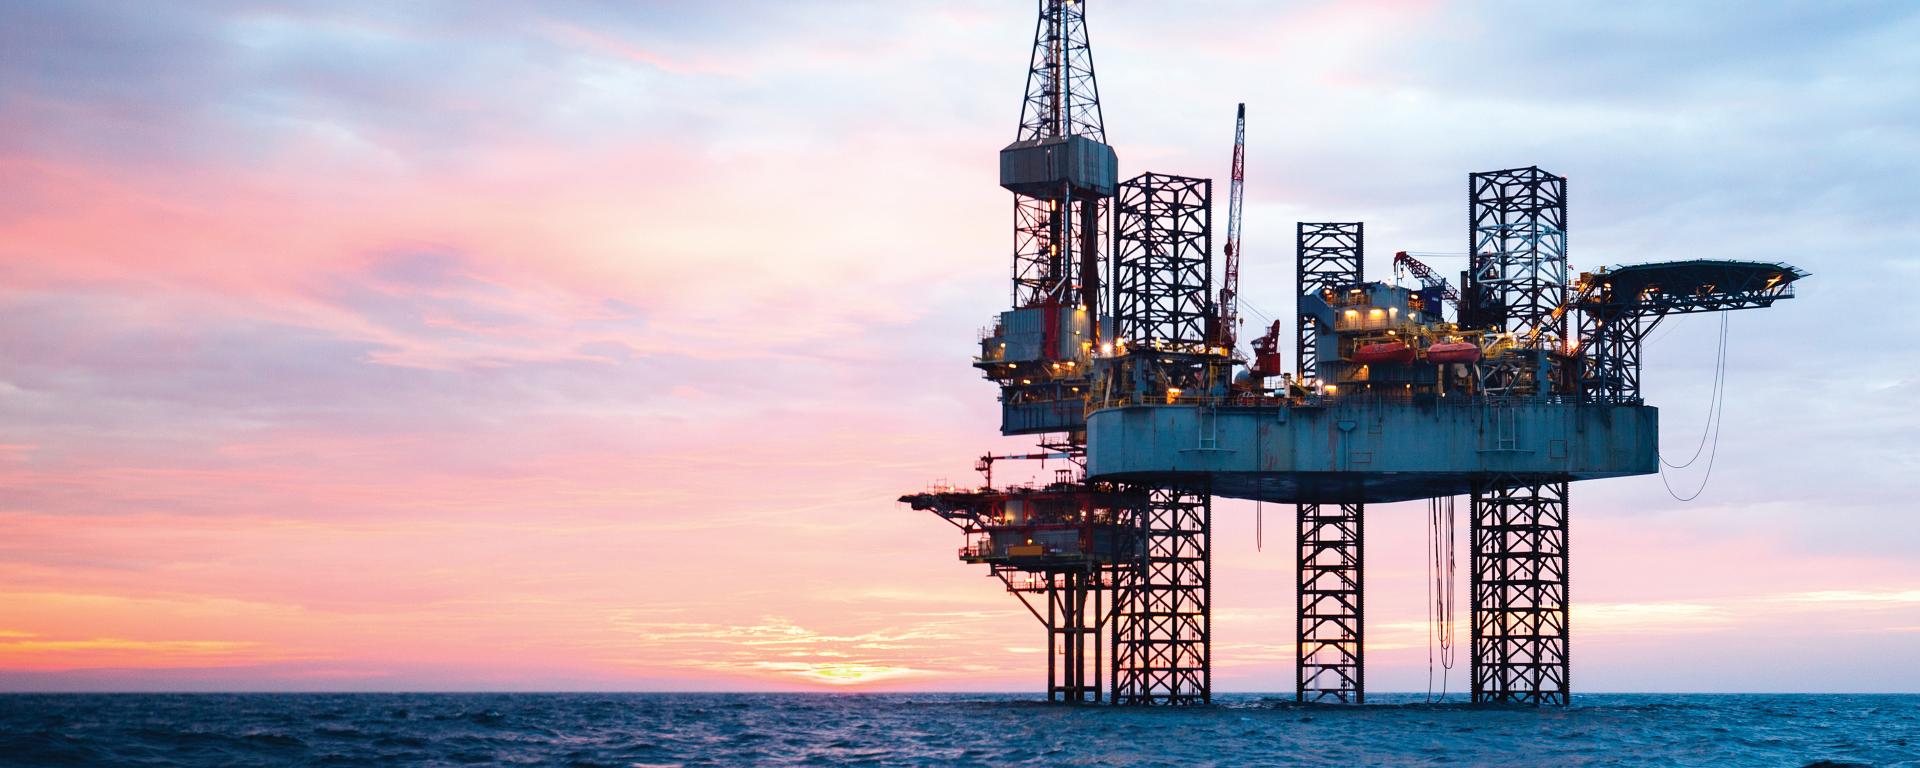 Oil rig in ocean during sunset